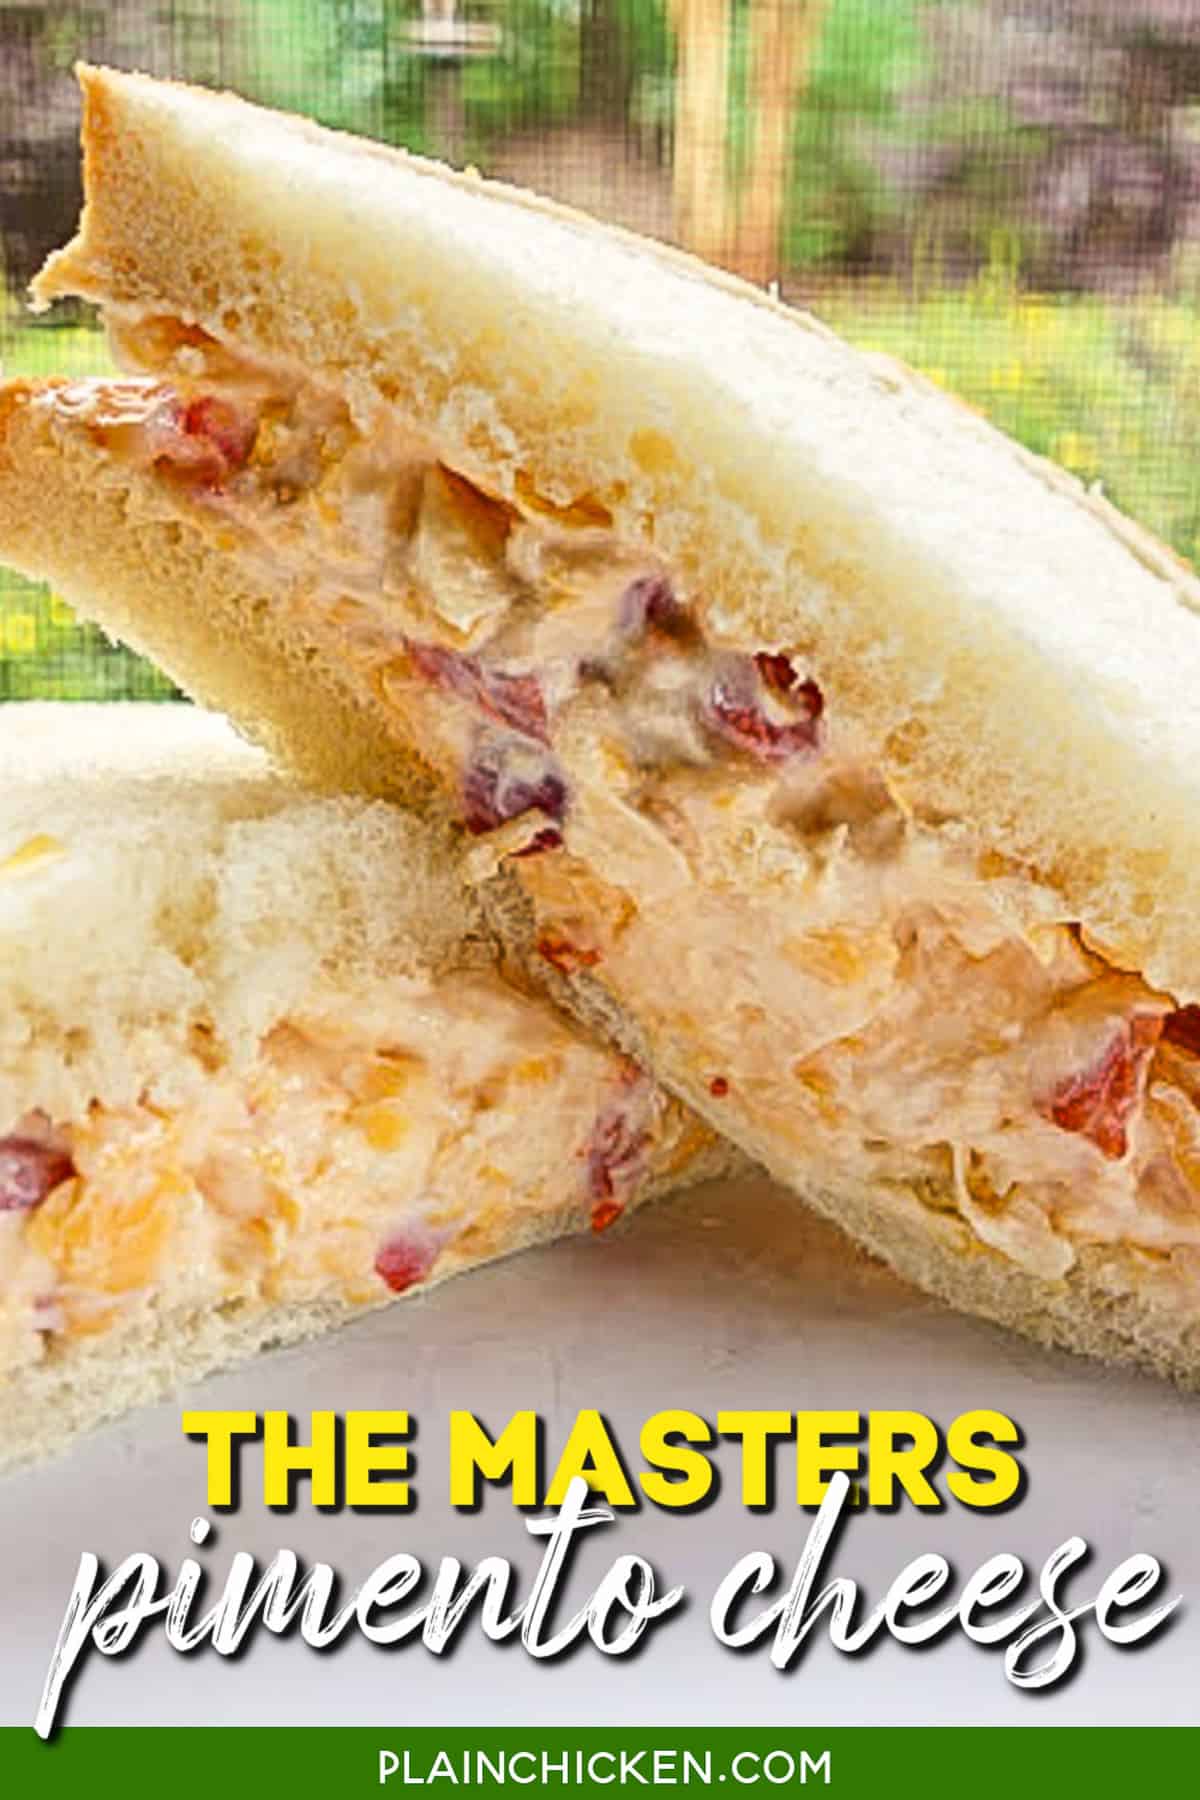 https://www.plainchicken.com/wp-content/uploads/2013/04/the-masters-pimento-cheese.jpg